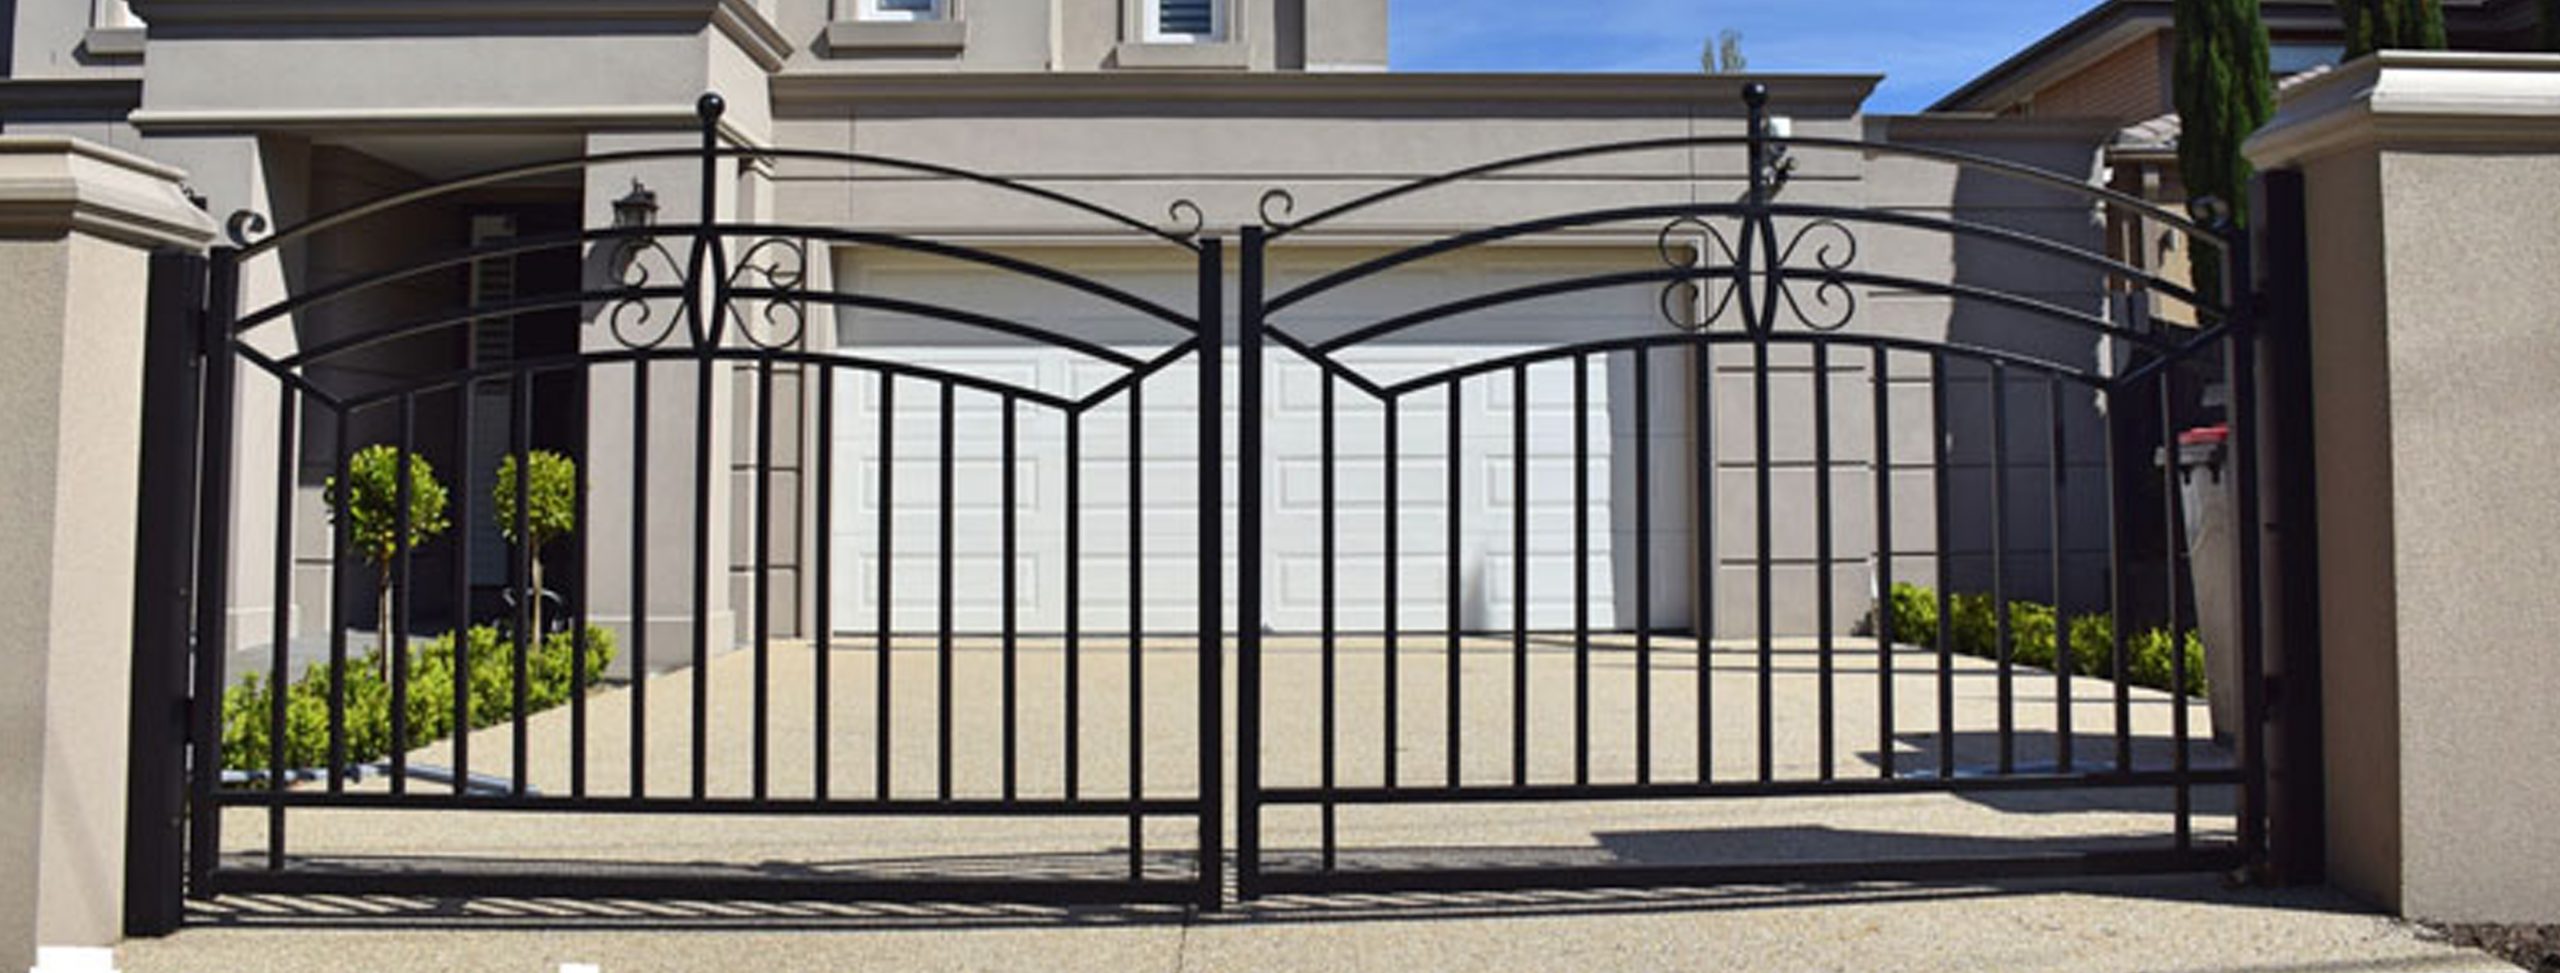 Decorative steel double gates designed and built by Custom Built Fences